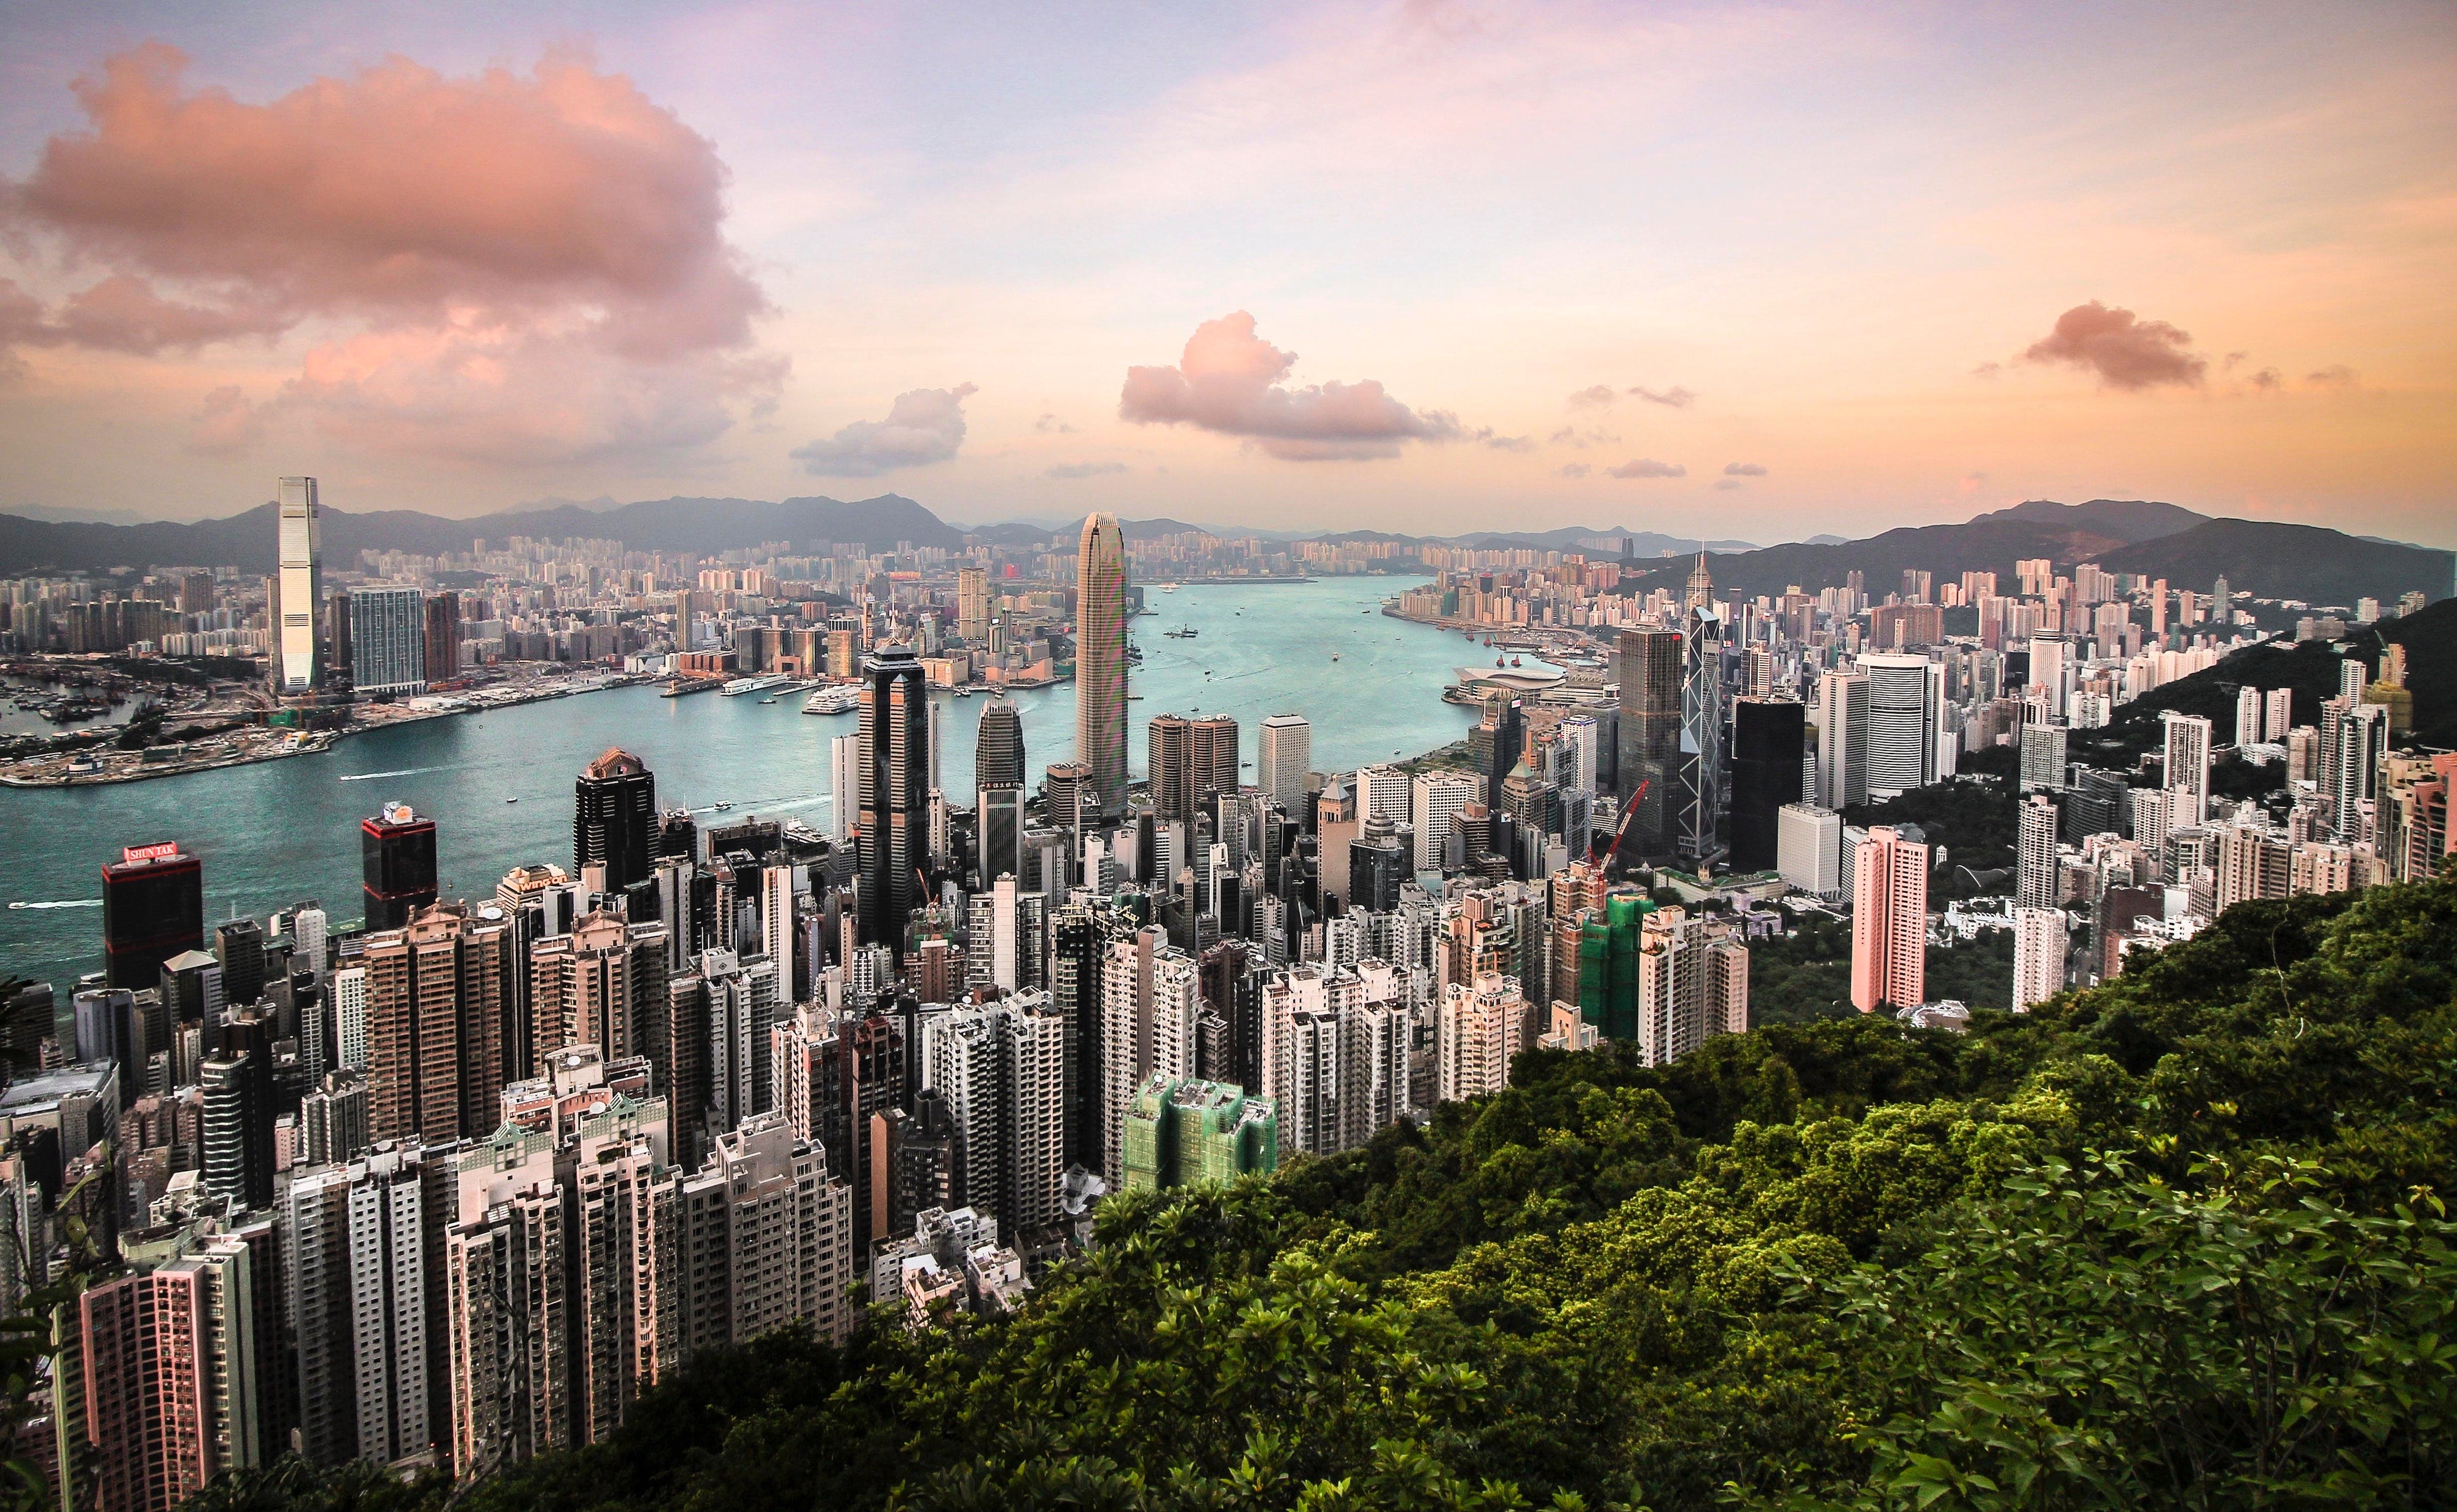 Pourquoi je veux absolument visiter Hong Kong